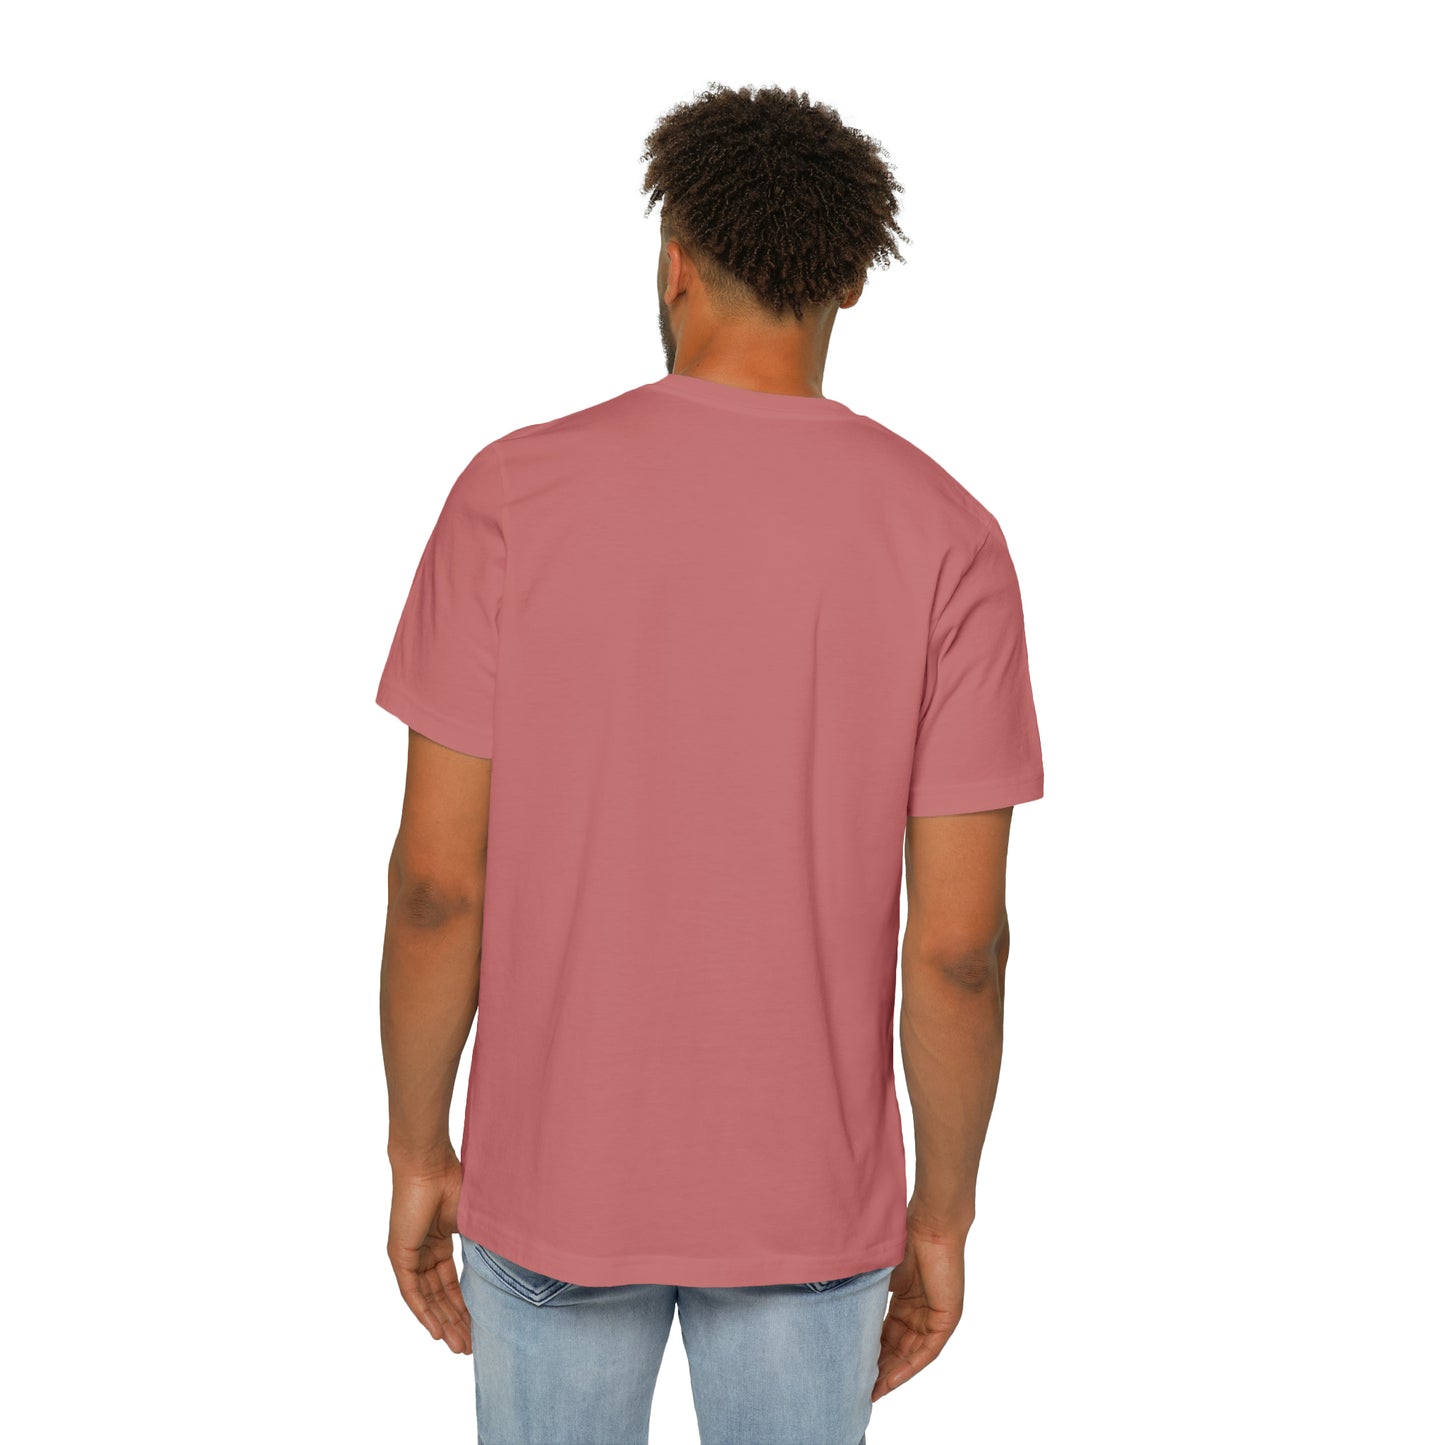 Aerosexual Club USA-Made Unisex Short-Sleeve Jersey T-Shirt